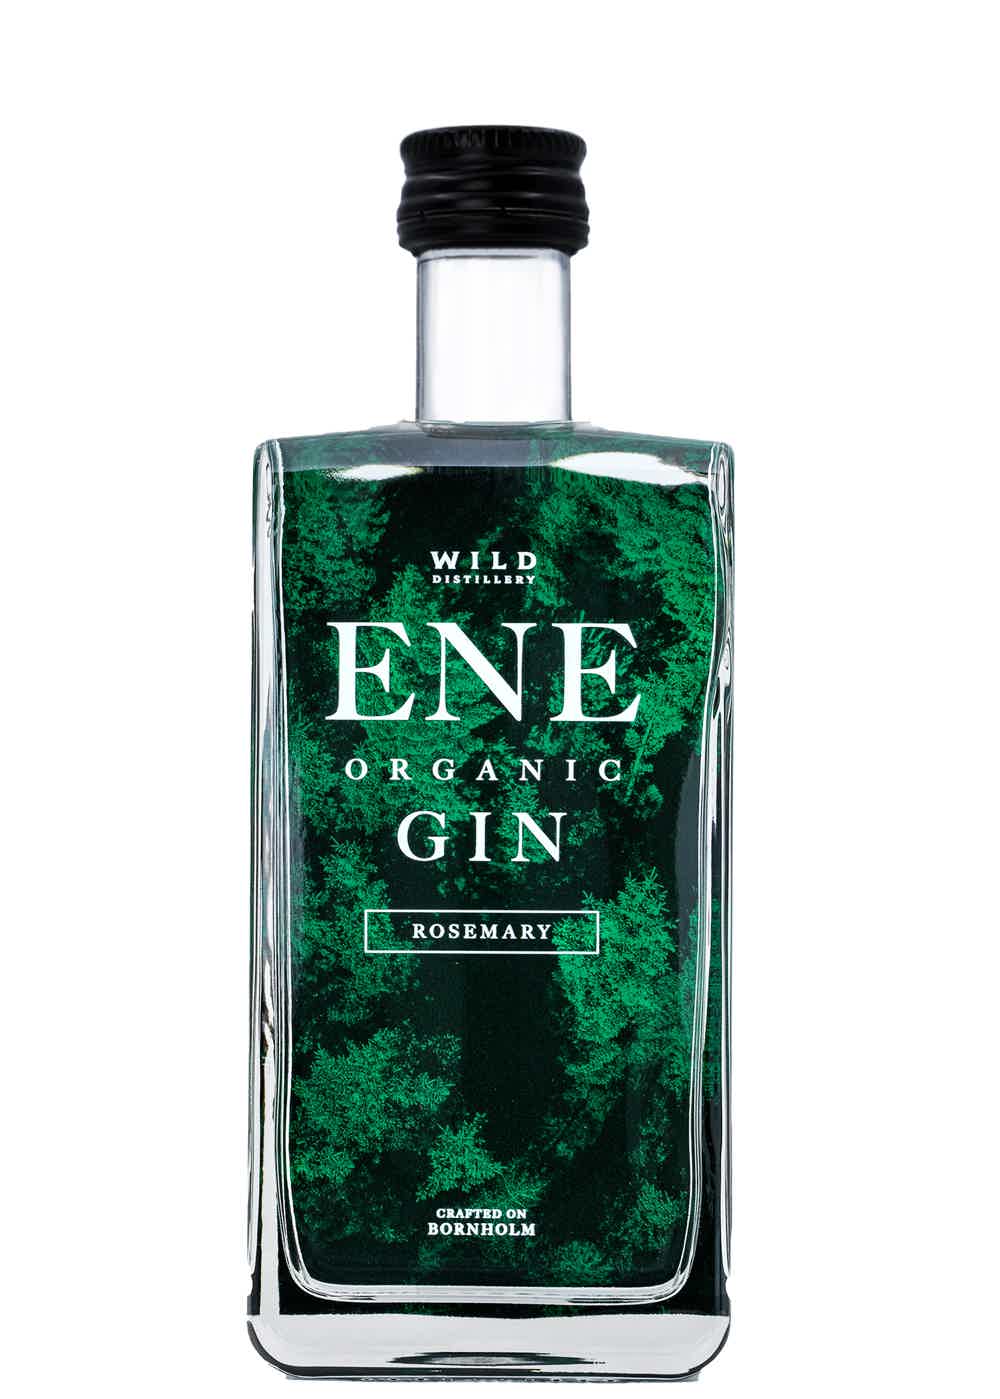  ENE Organic Gin - Rosemary 40%